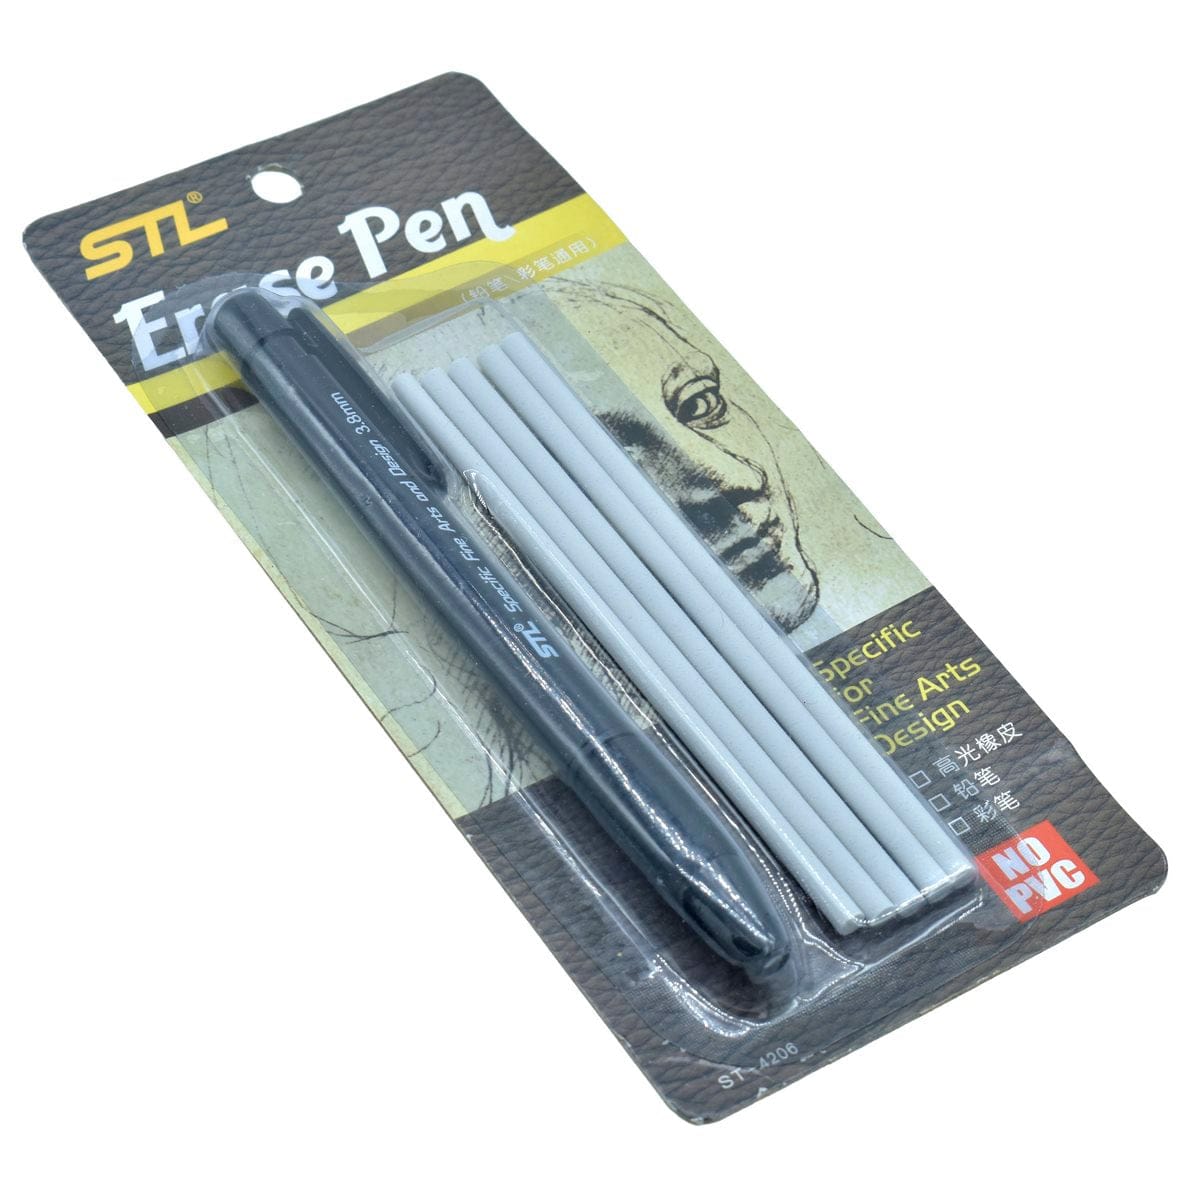 jags-mumbai Pen Erase Pen ST-4206